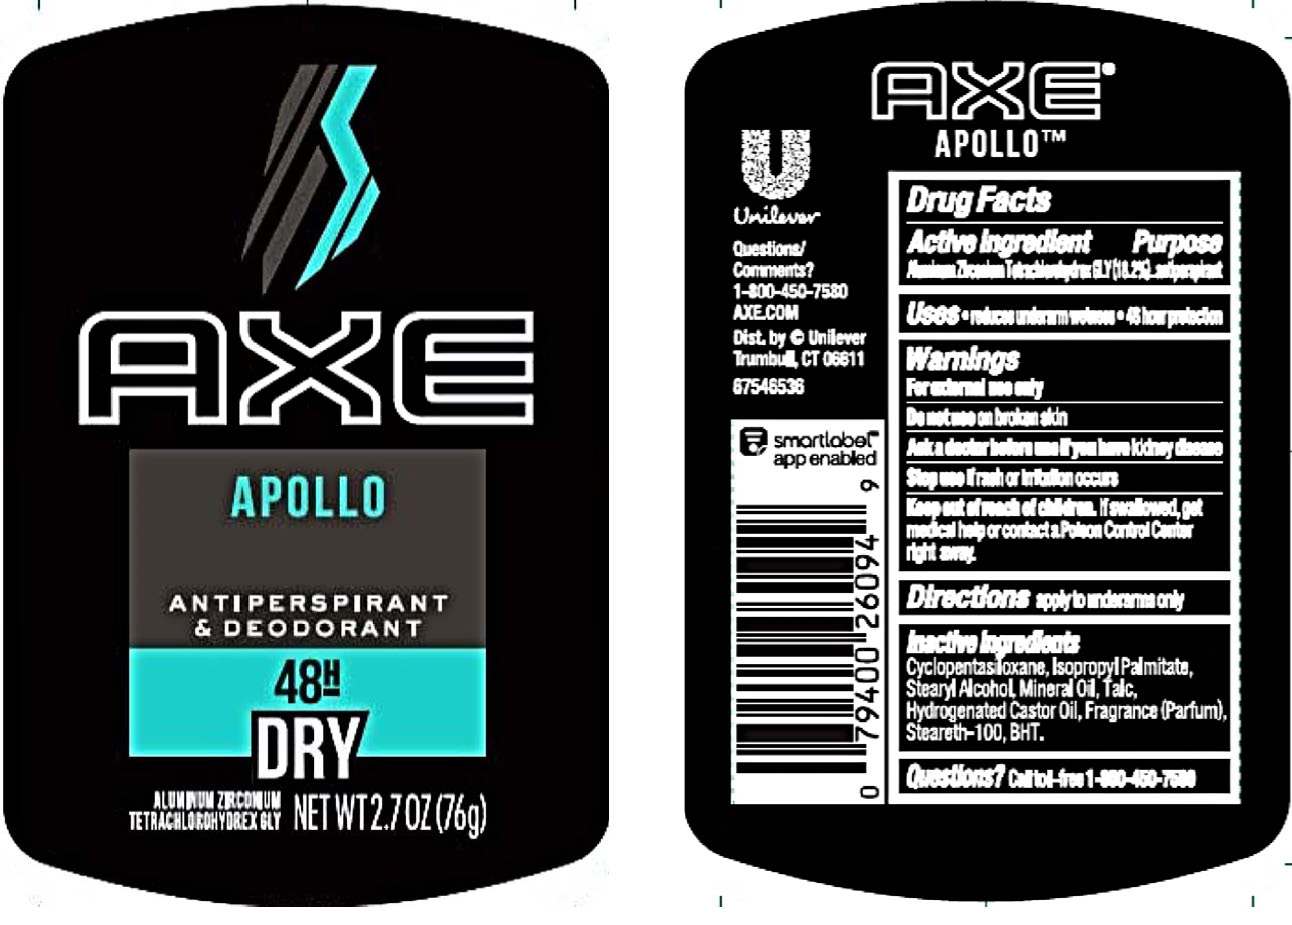 vertaler Uitmaken Mainstream Axe Apollo 48H Dry Antiperspirant and Deodorant